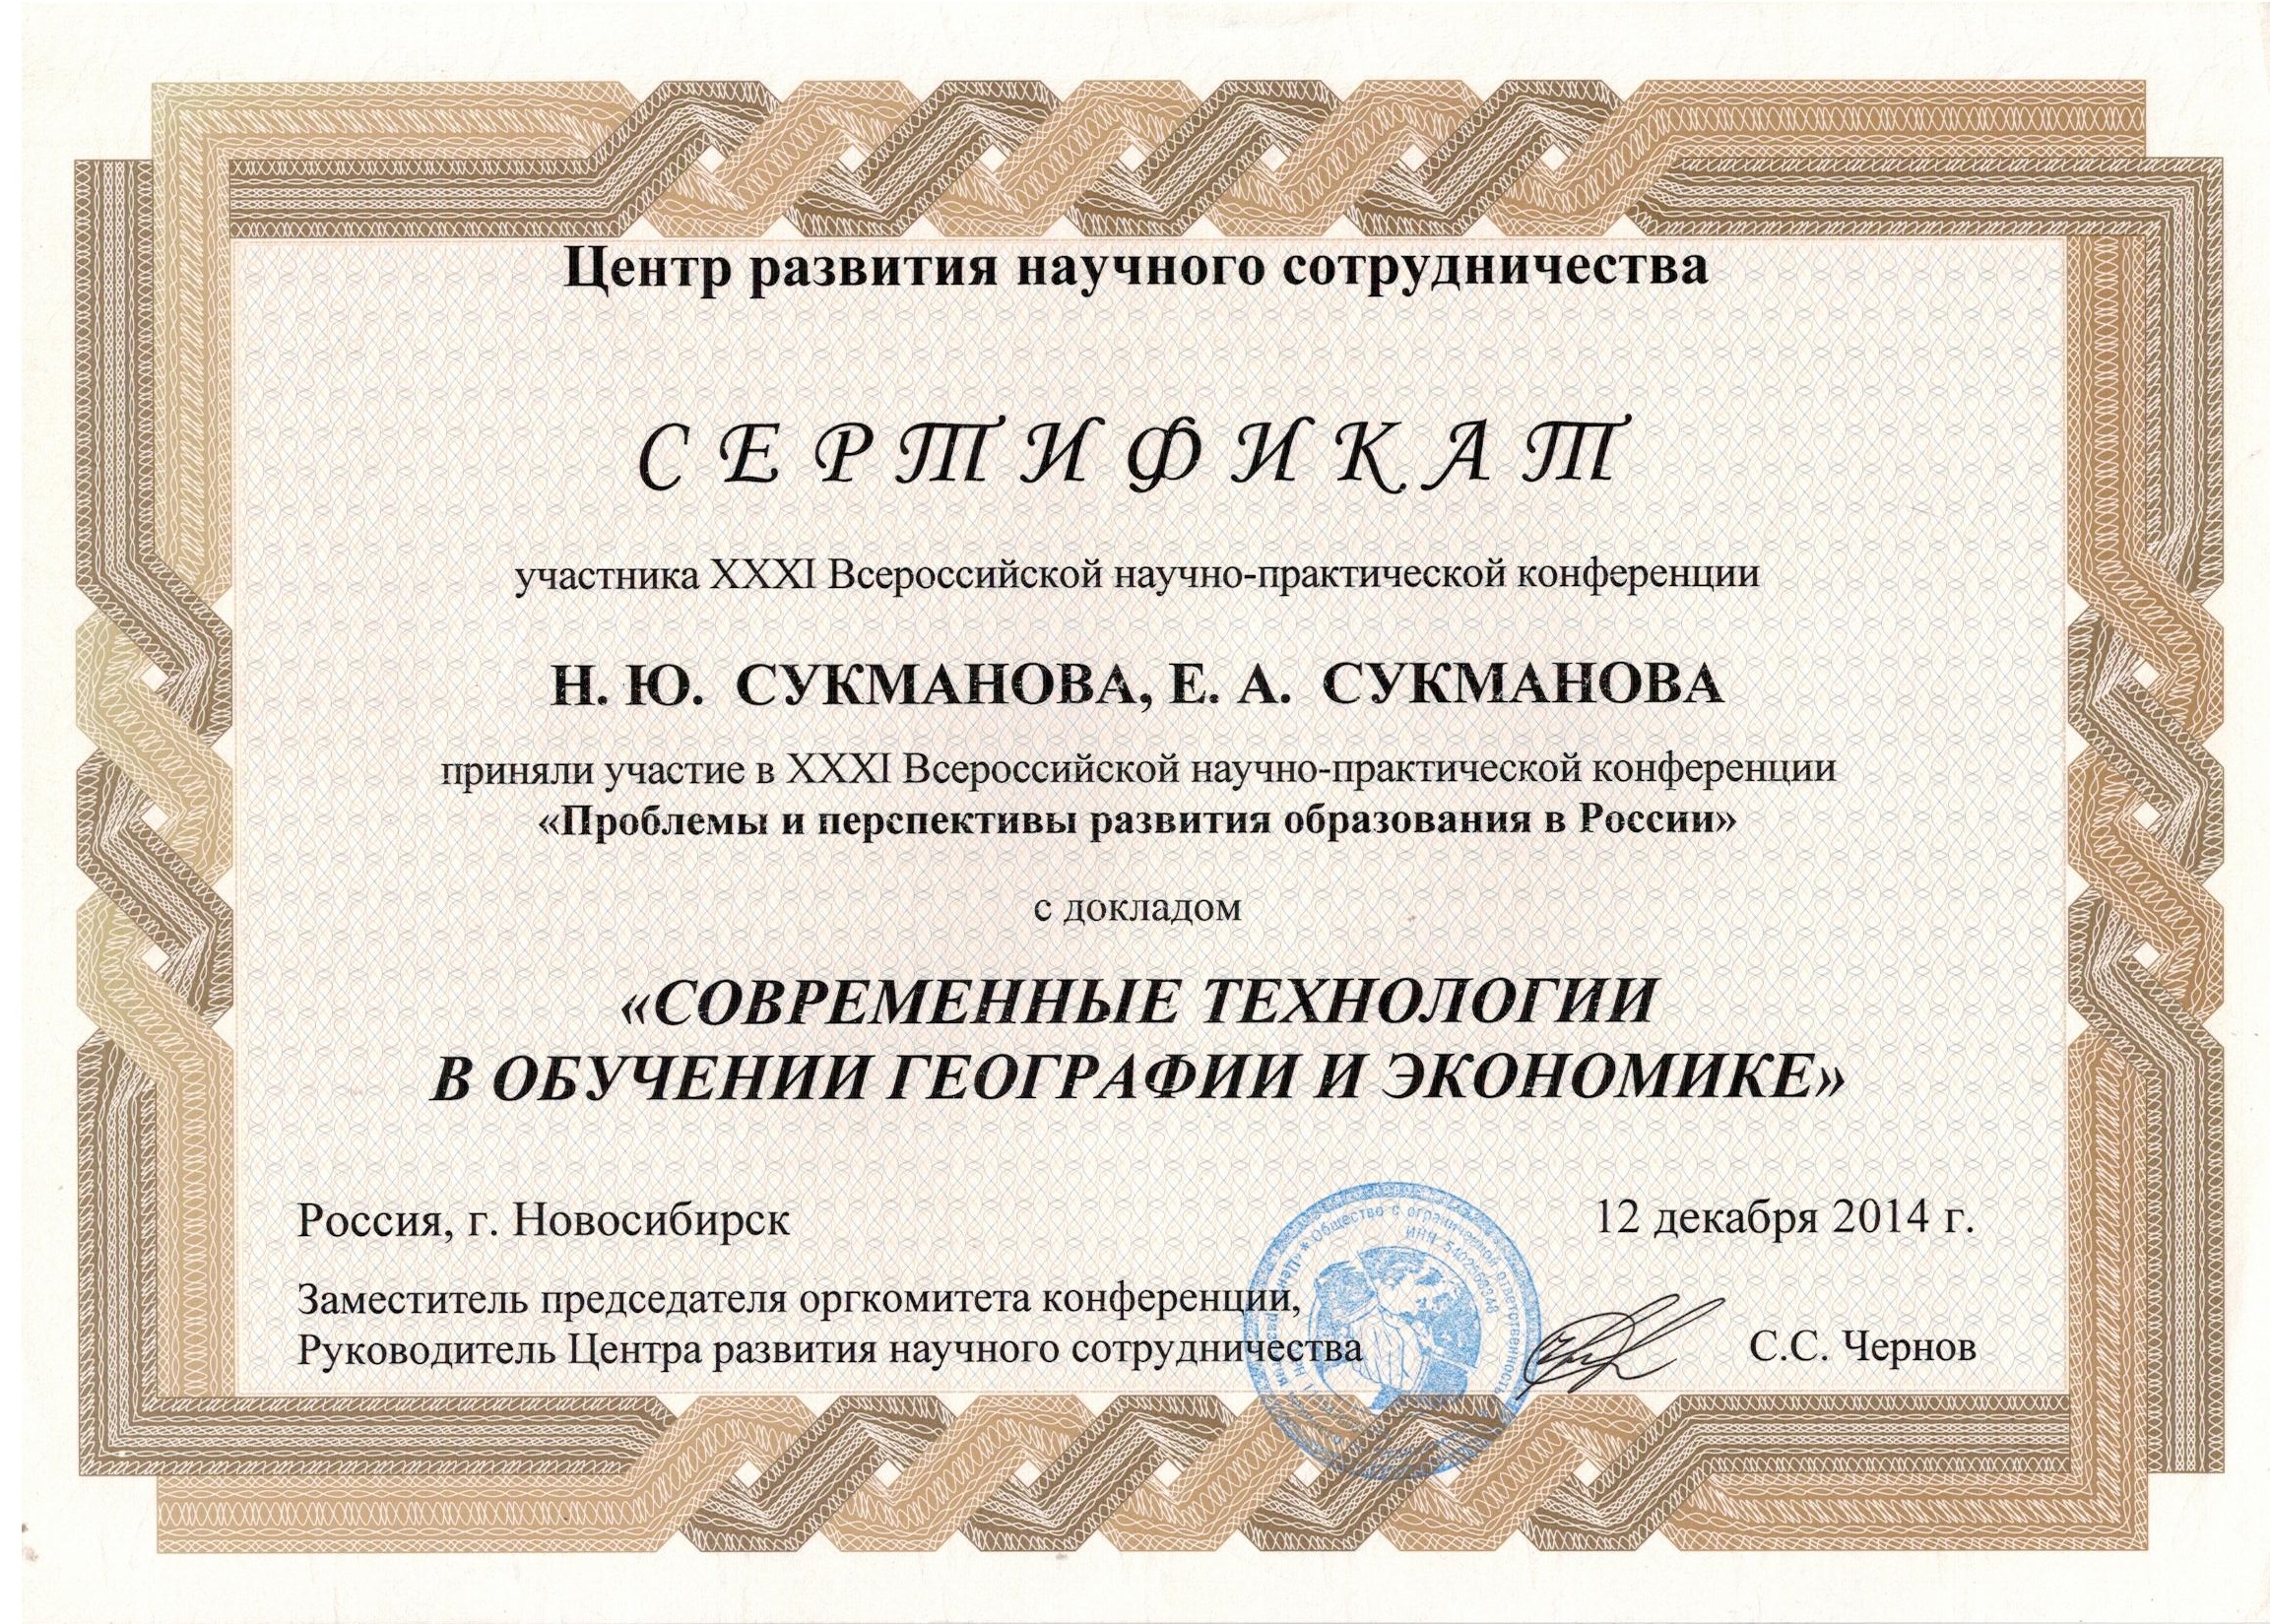 сертификат НПК  2014 001.jpg